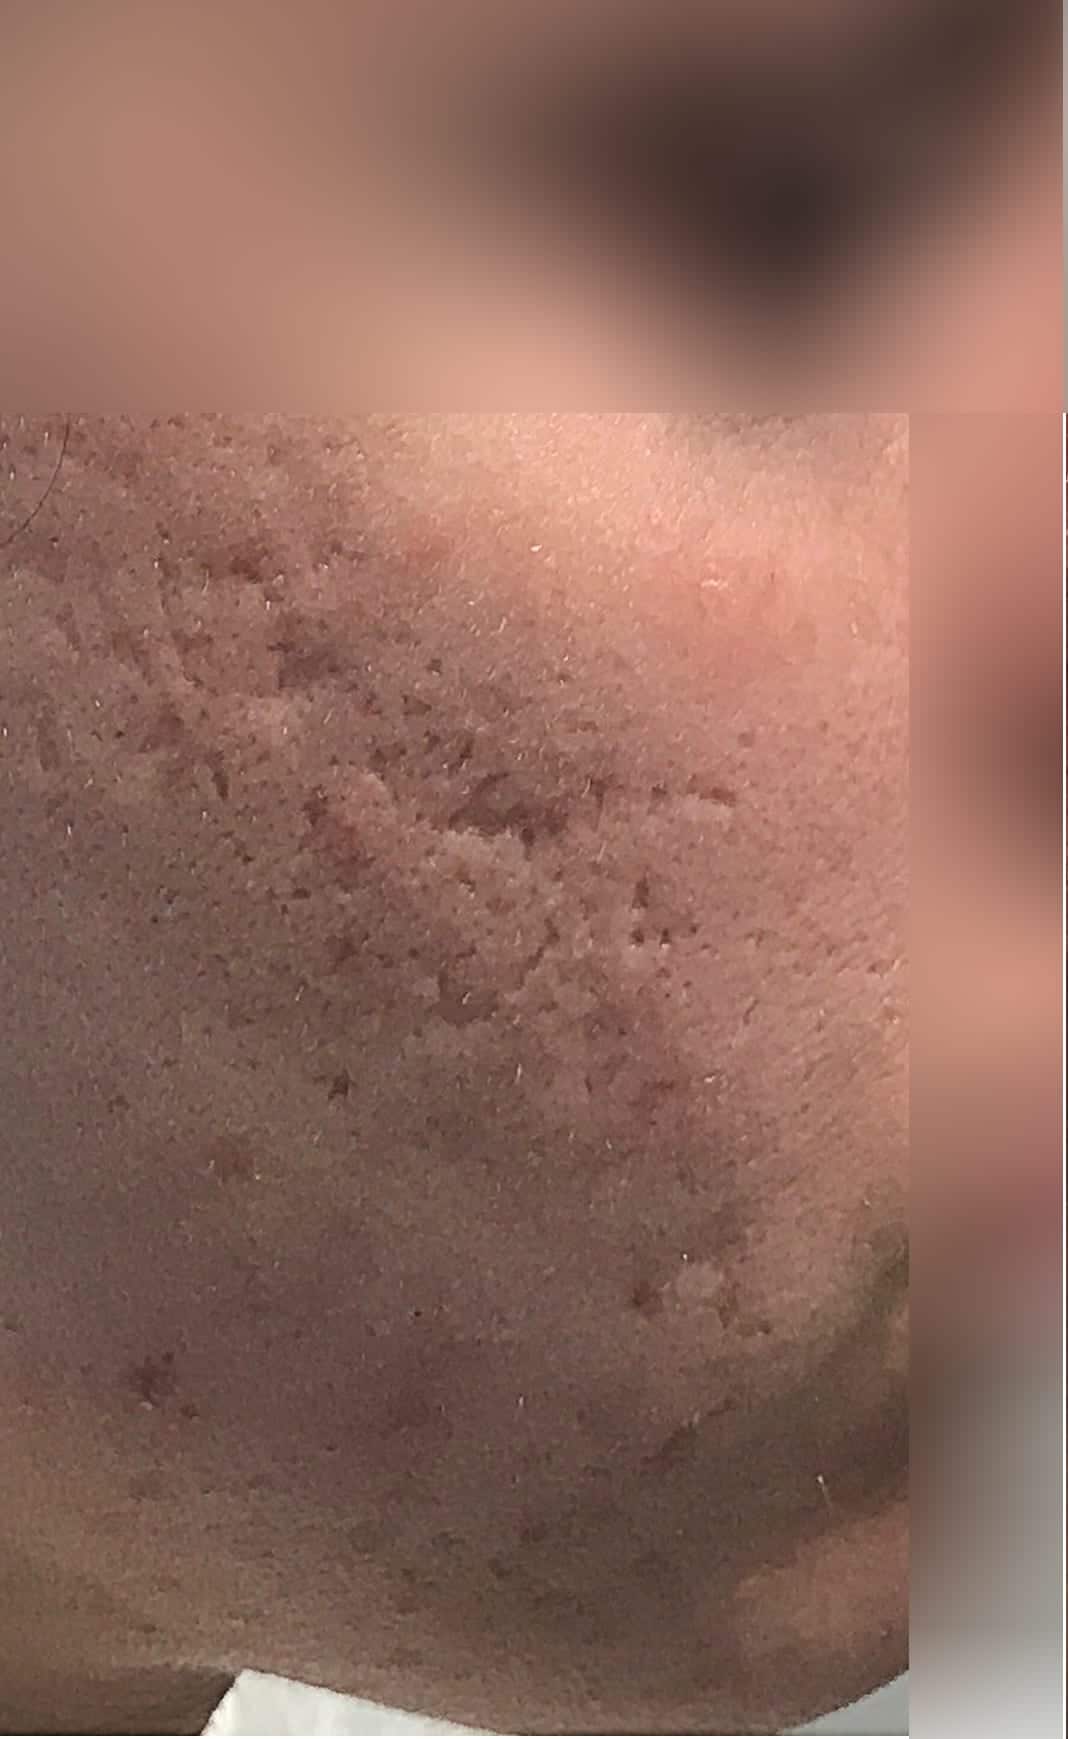 acne scars before nov 26th